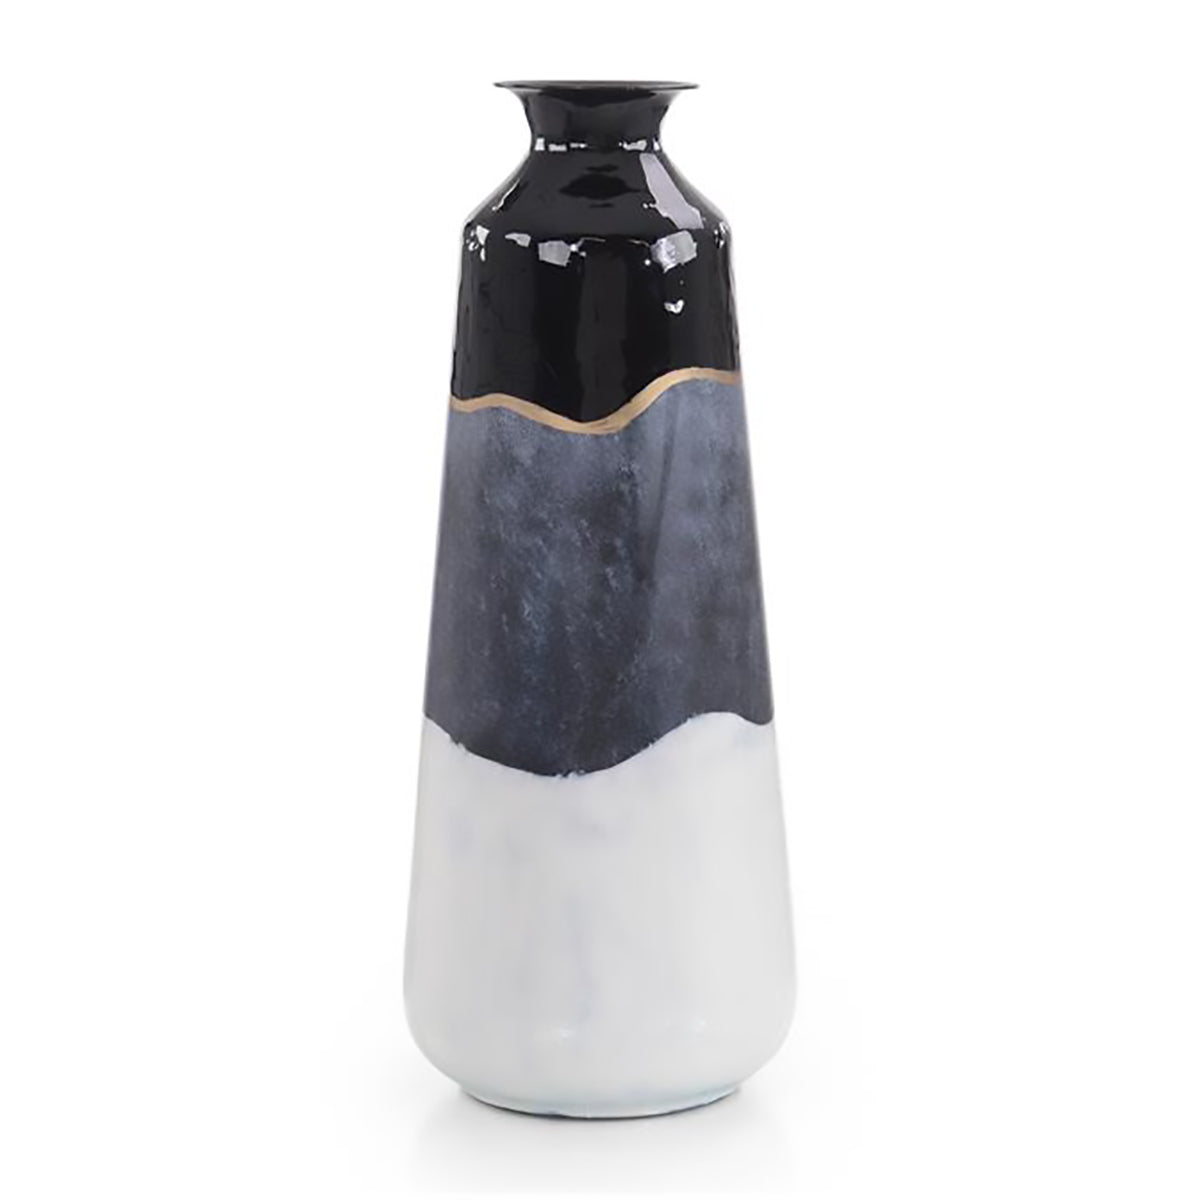 Abstract Black-and-White Iron Vase I